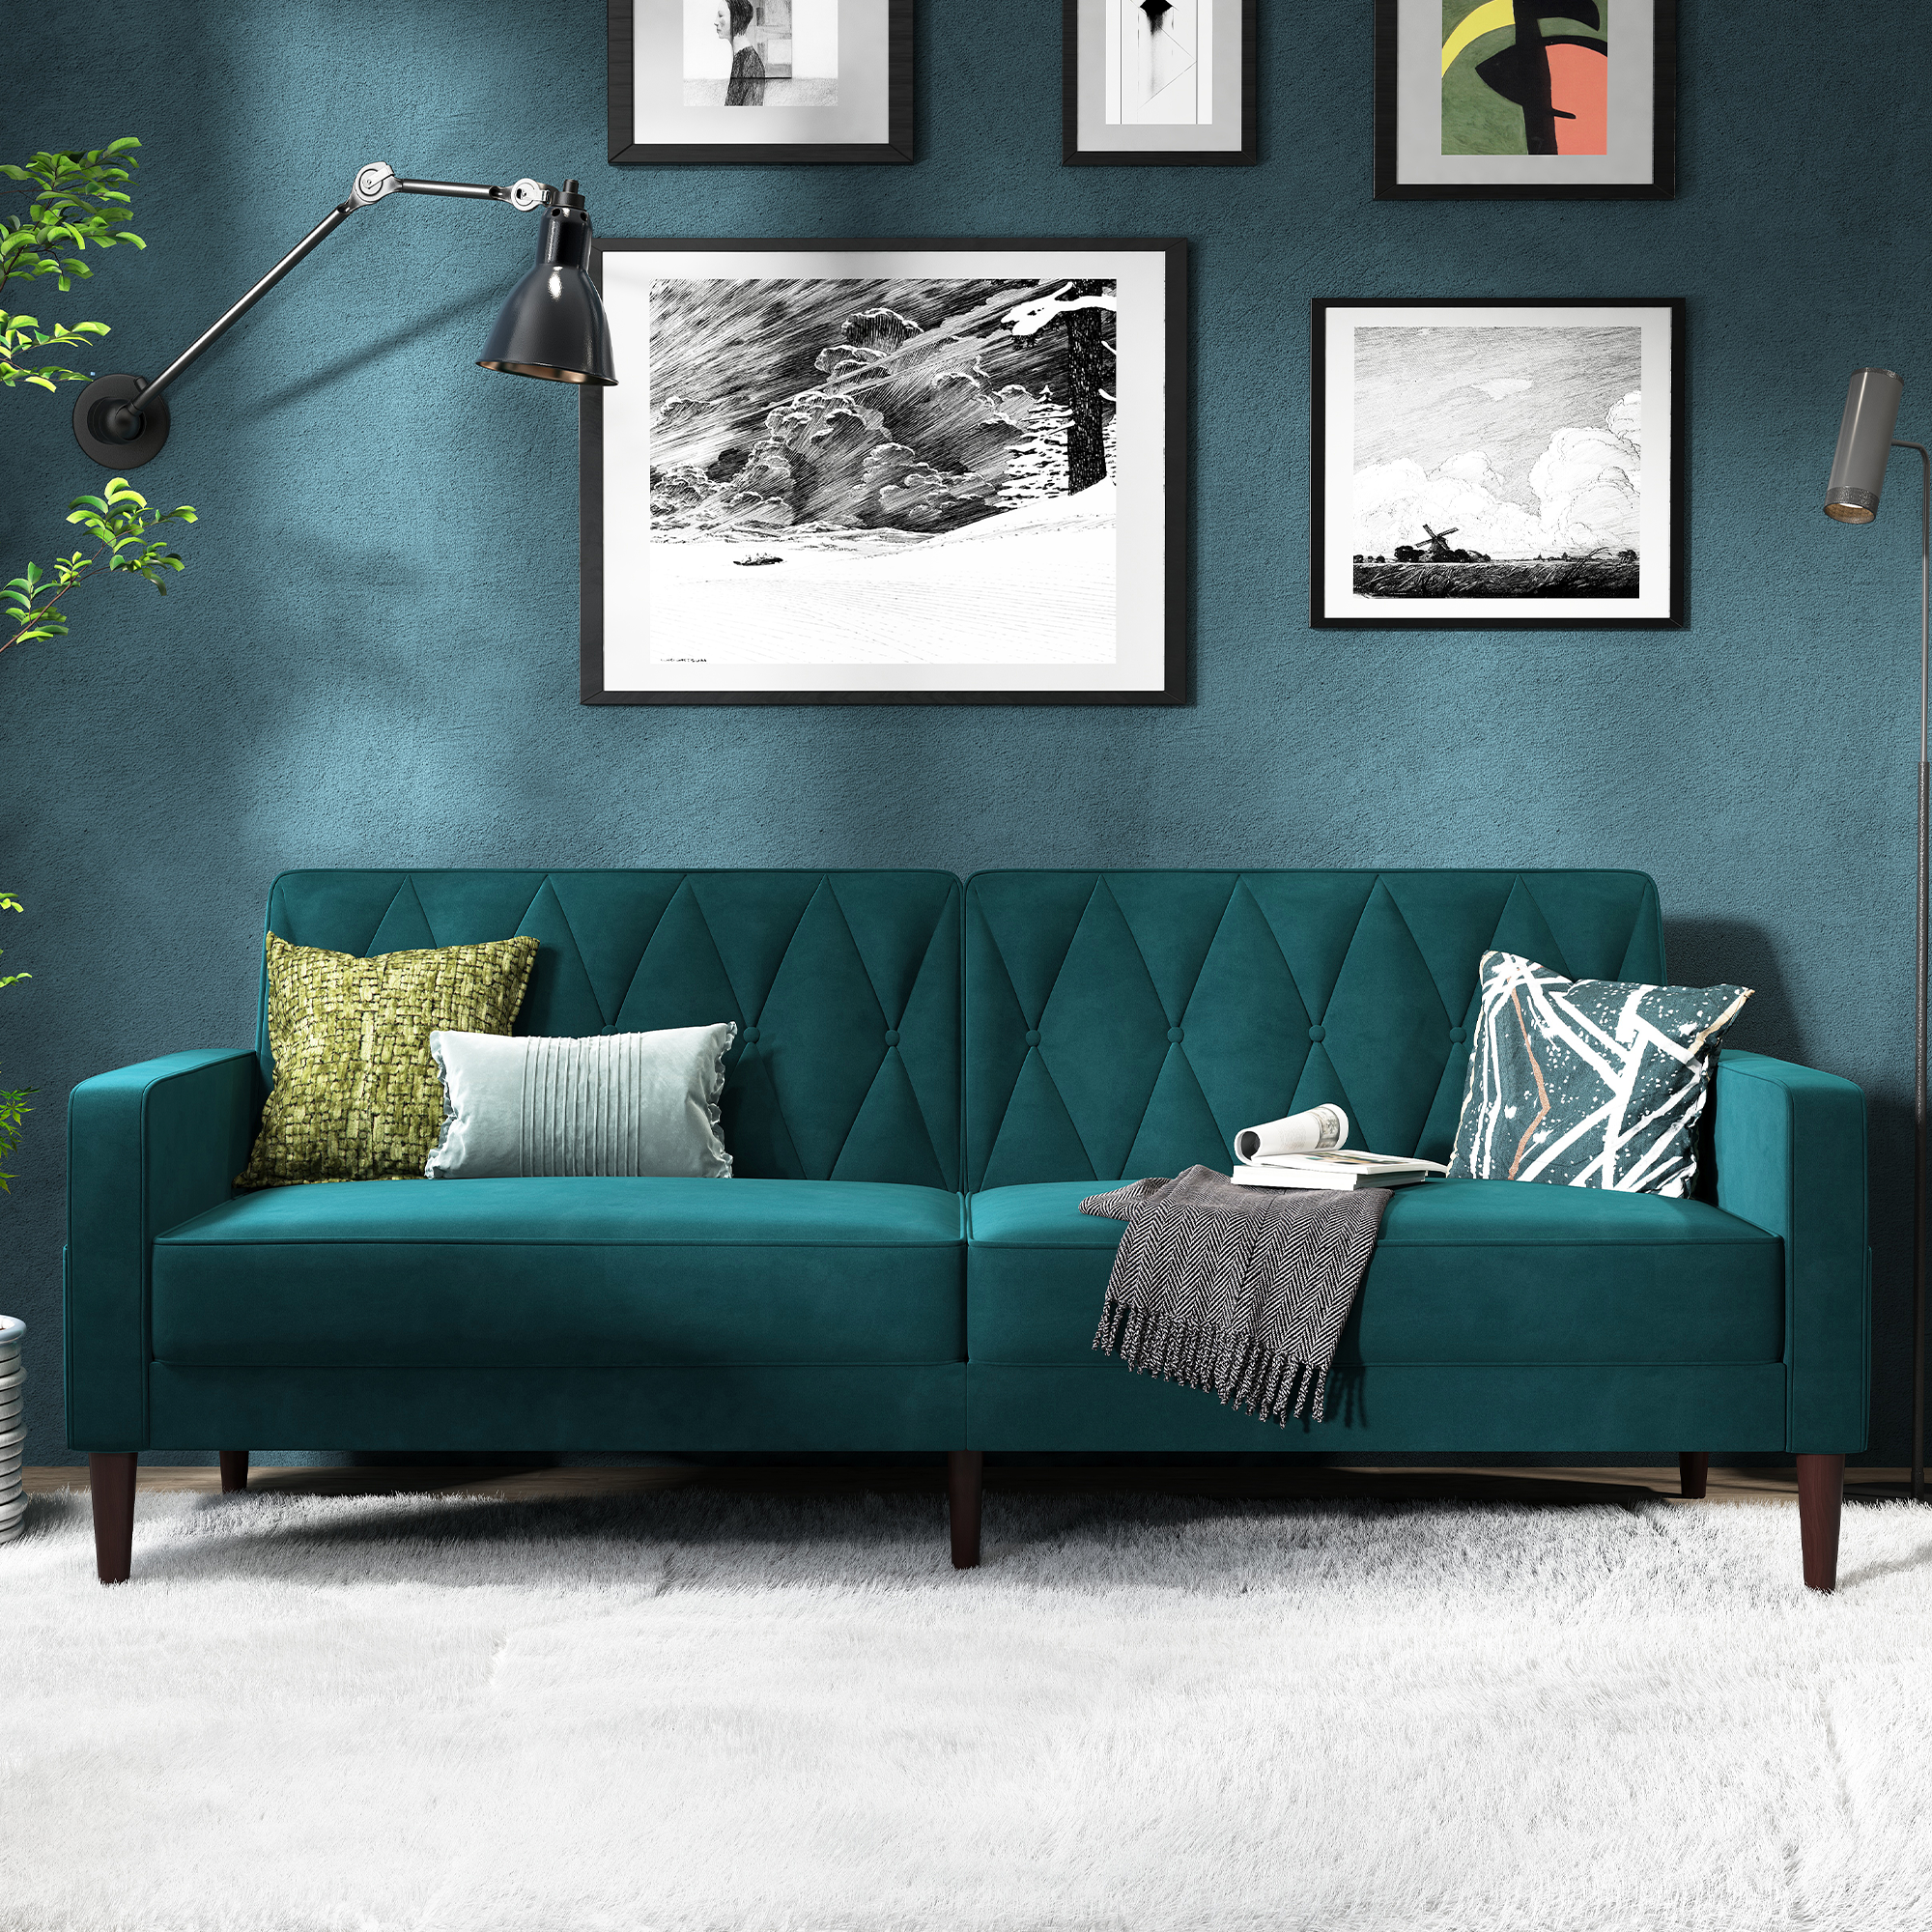 HONBAY 3-in-1 Convertible Design Sofa Futon Bed